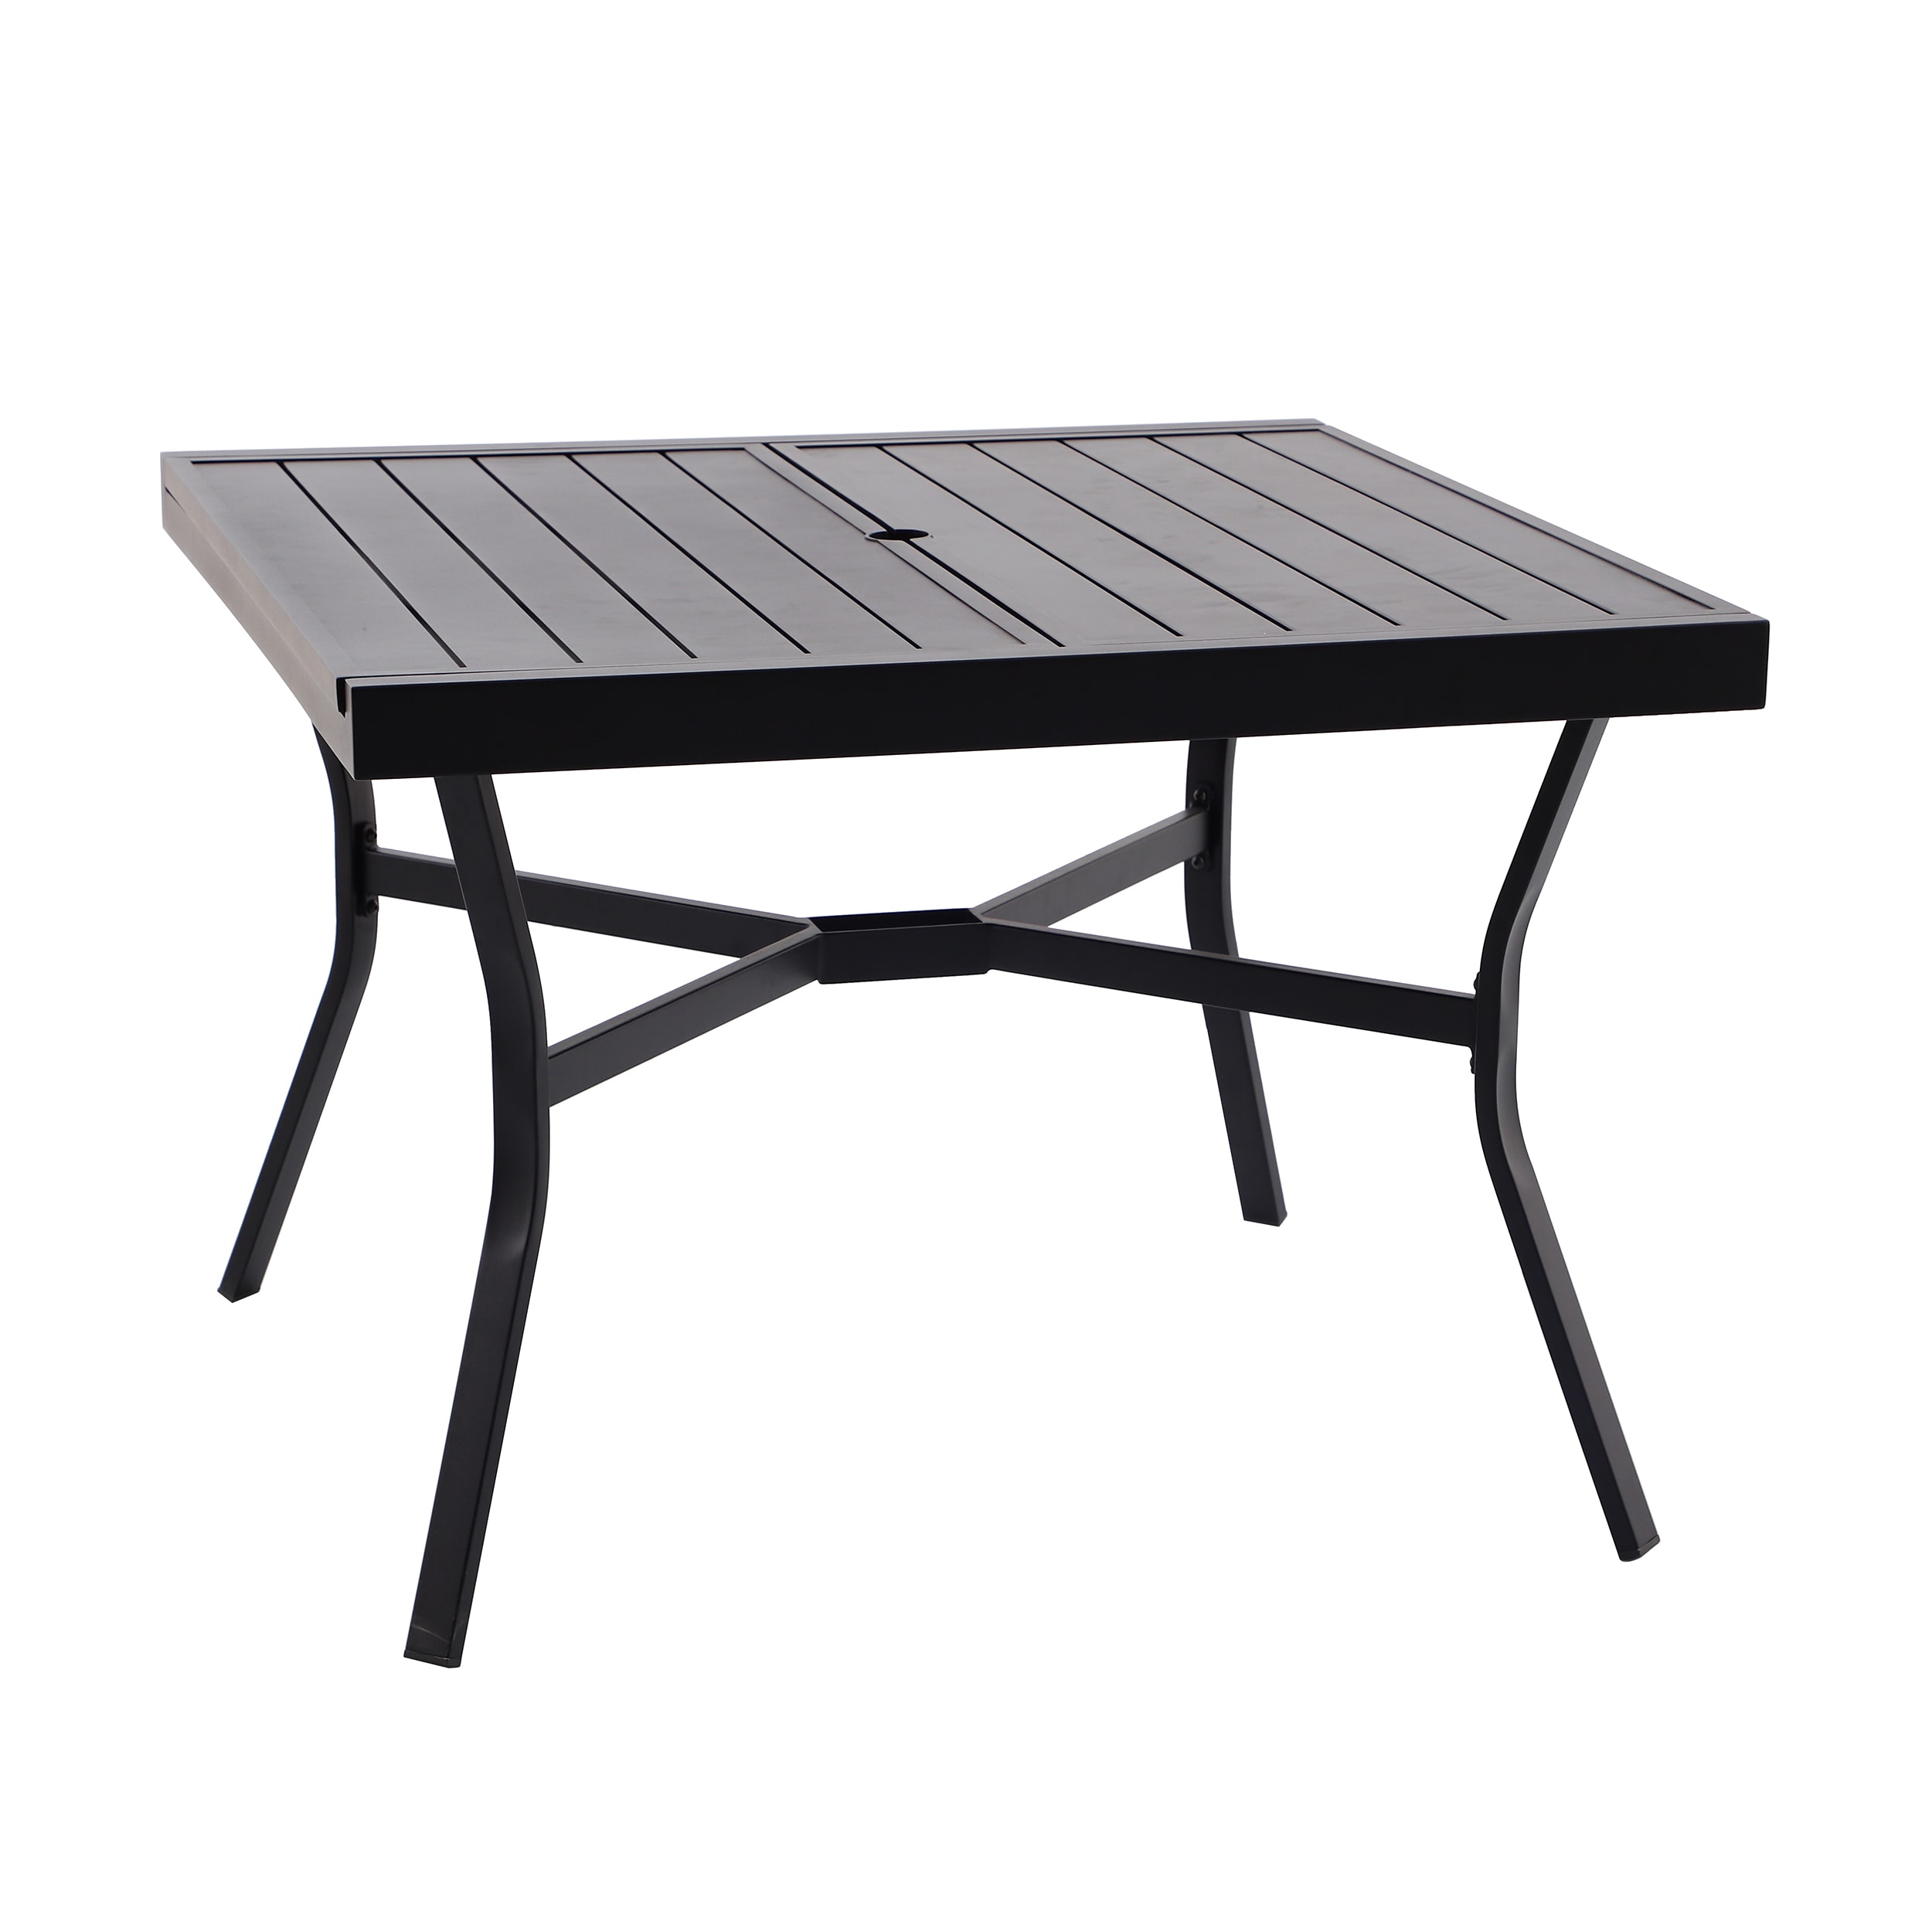 Bistro Patio Steel Square Table Outdoor Deck Durable Garden Furniture Pelham Bay 